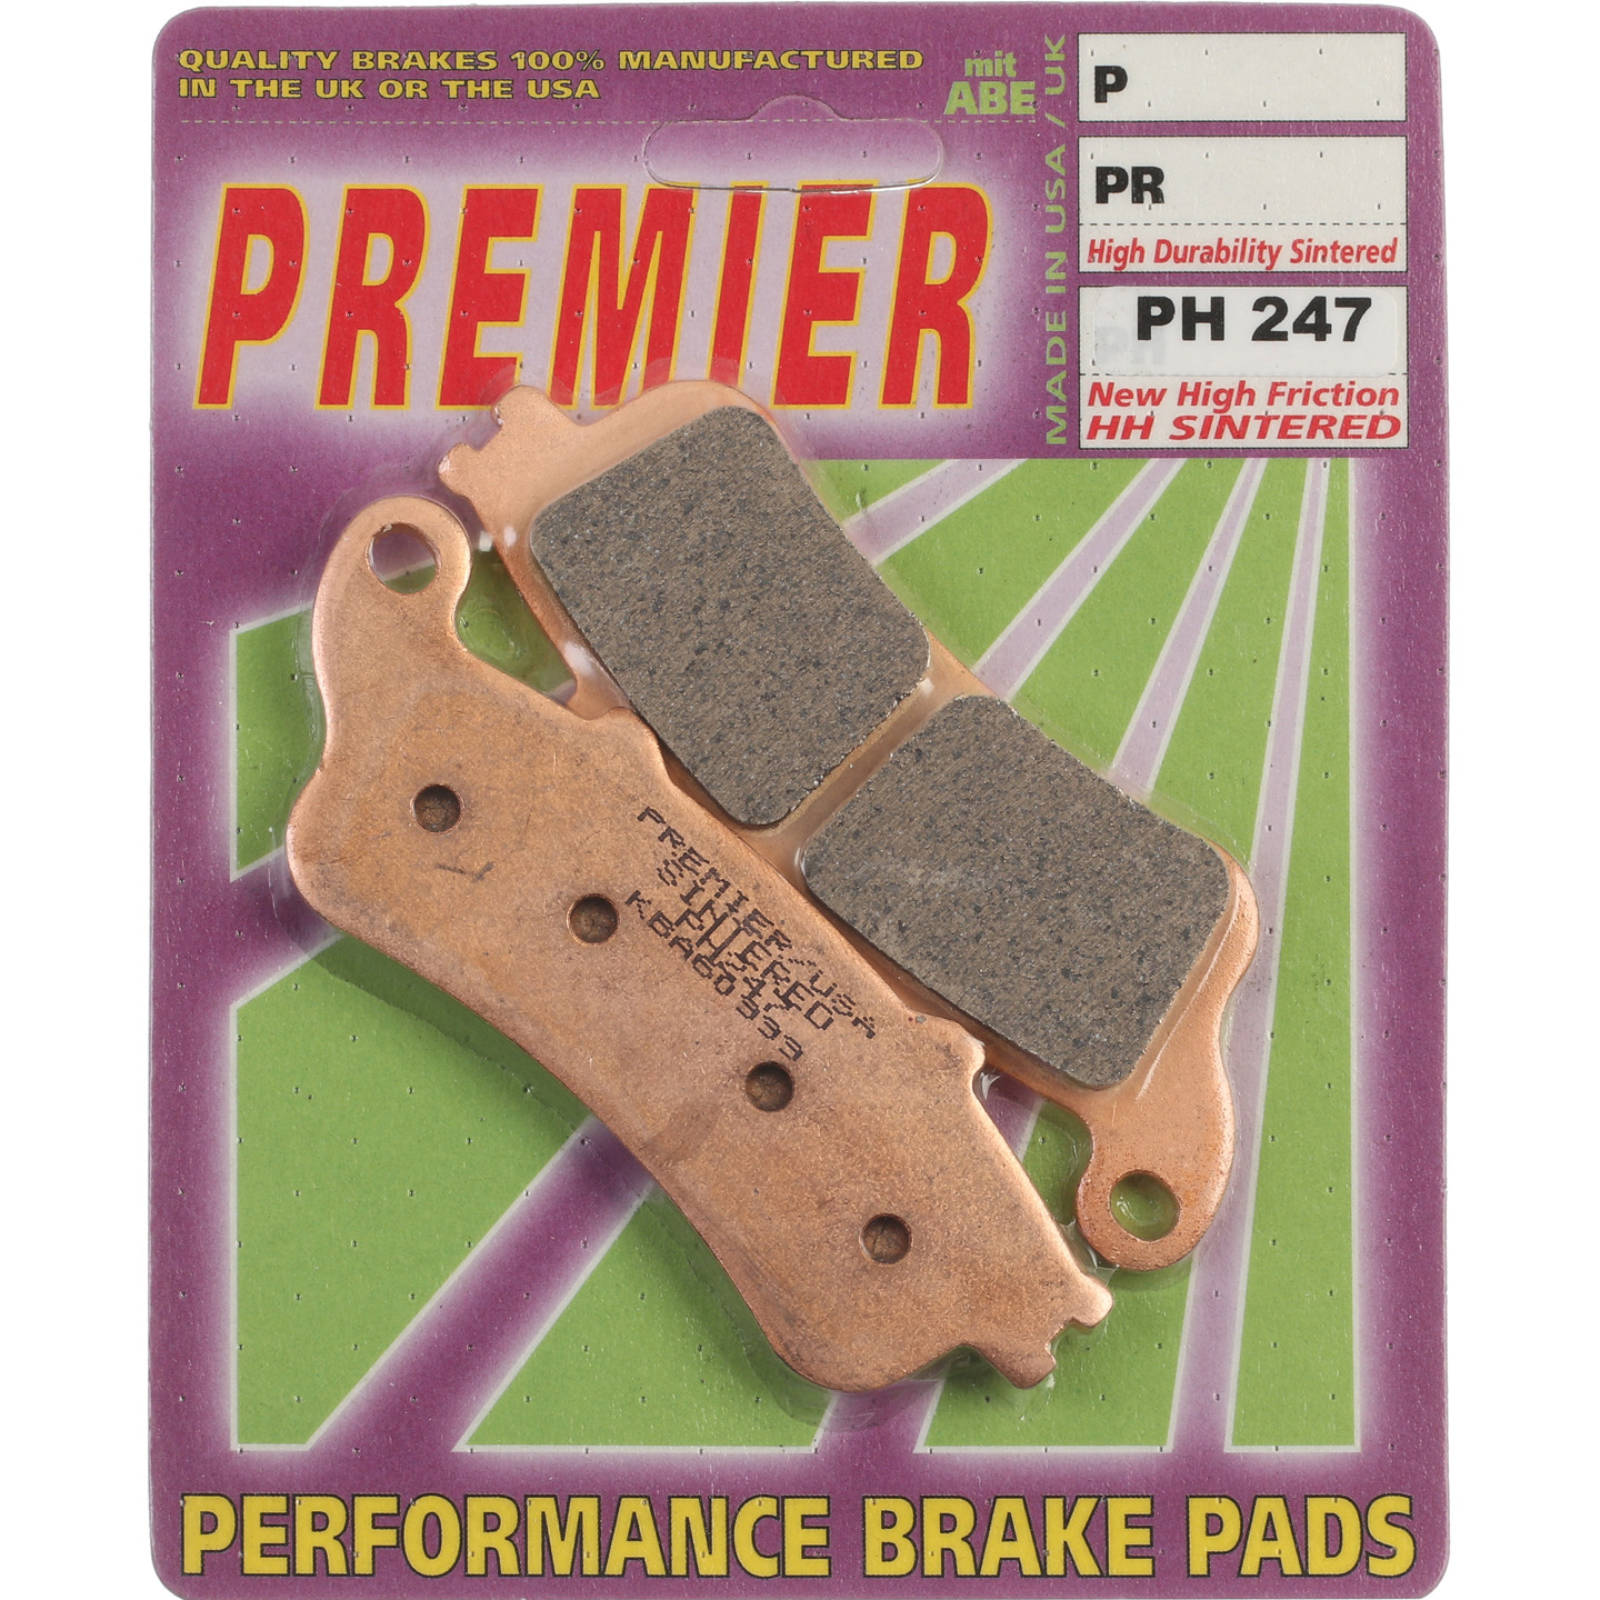 New PREMIER Brake Pad - PH Street Sintered (GF178S3) #PBPH247